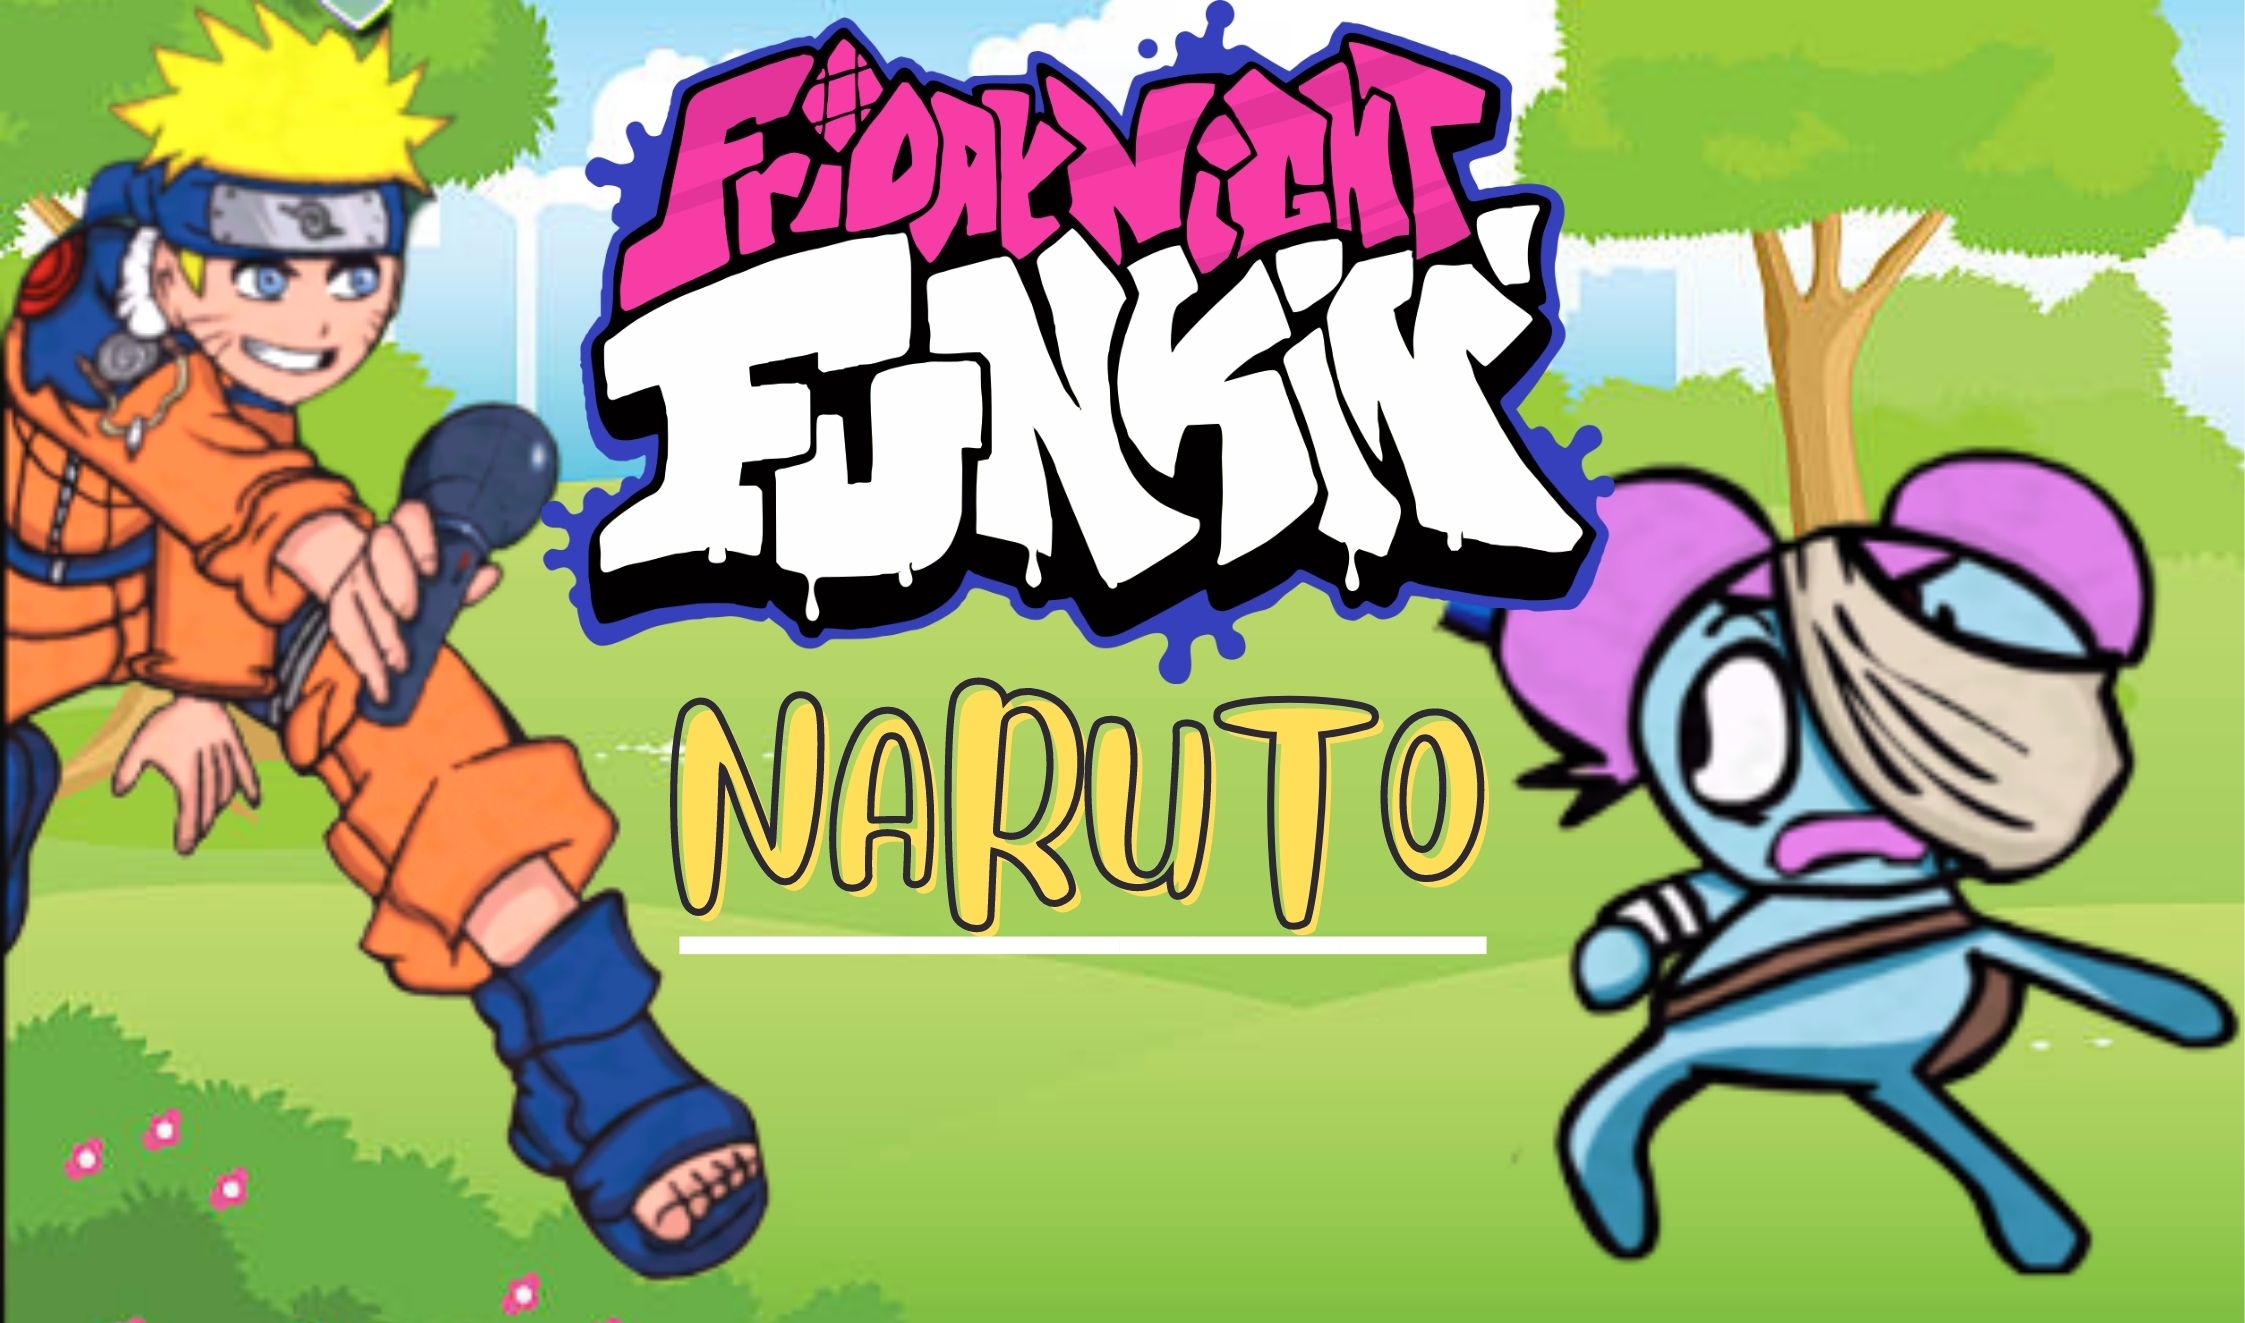 FNF VS Garcello free download APK file - Friday Night Funkin